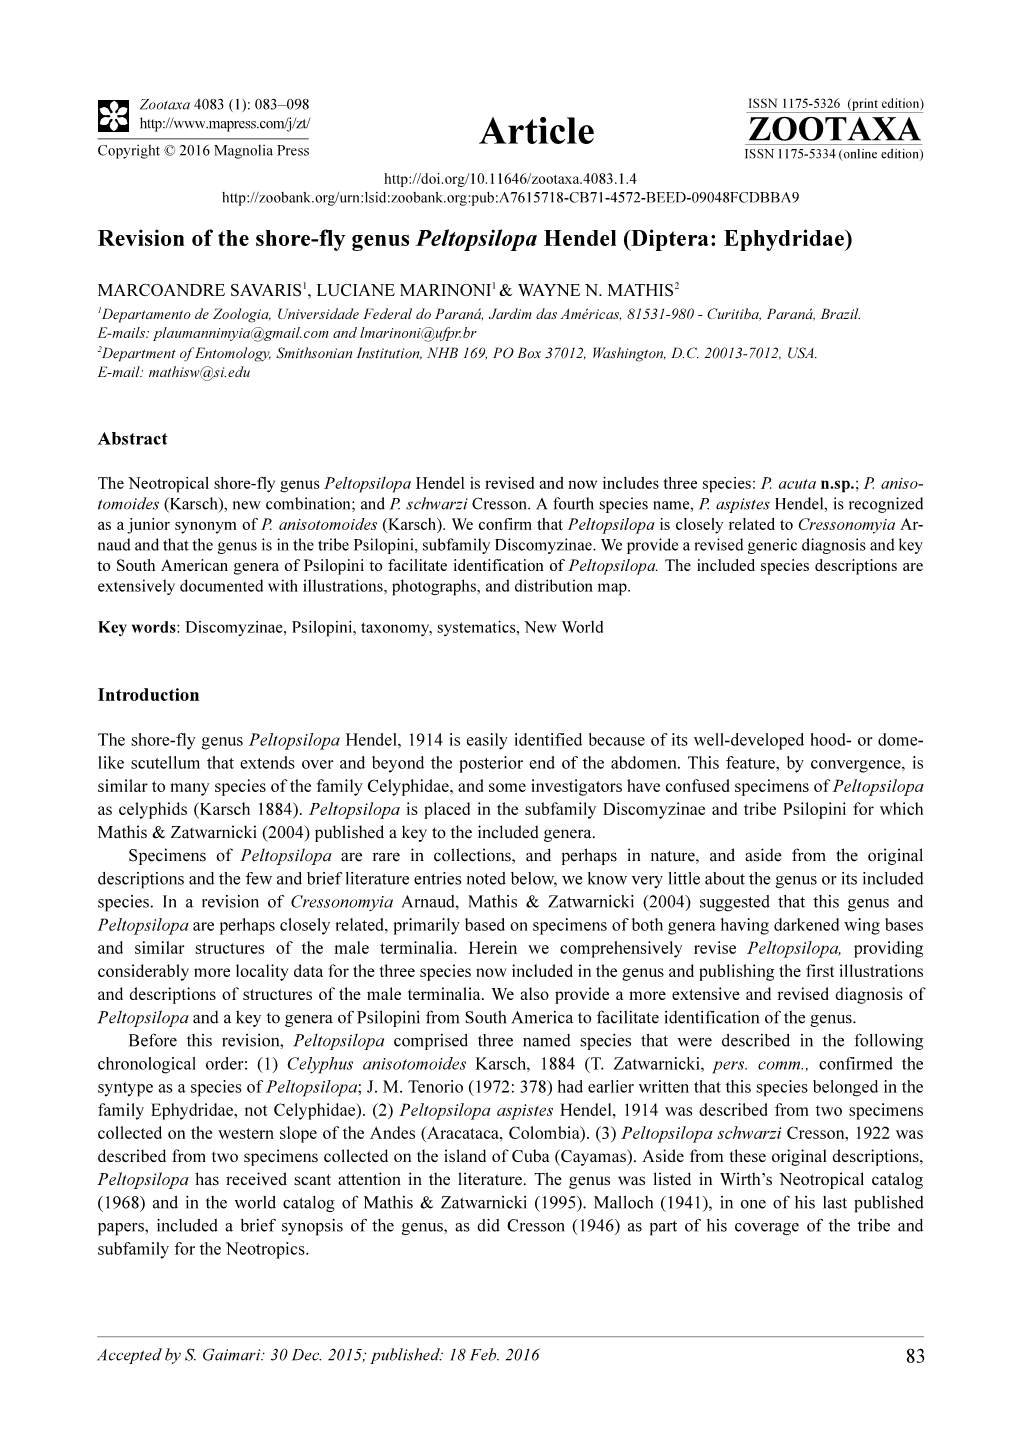 Revision of the Shore-Fly Genus Peltopsilopa Hendel (Diptera: Ephydridae)